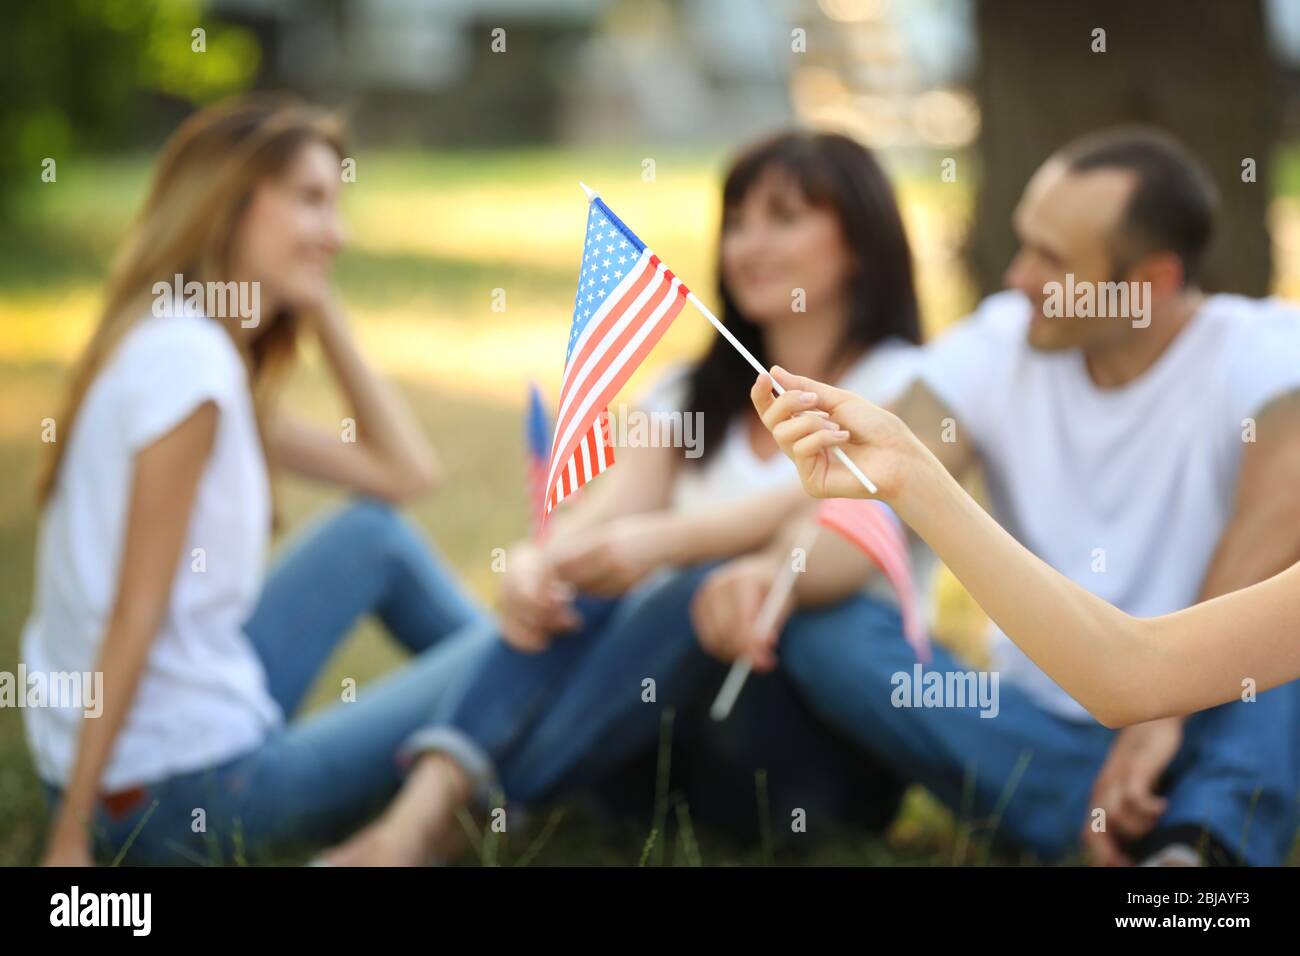 Female hand holding USA flag on blurred background Stock Photo